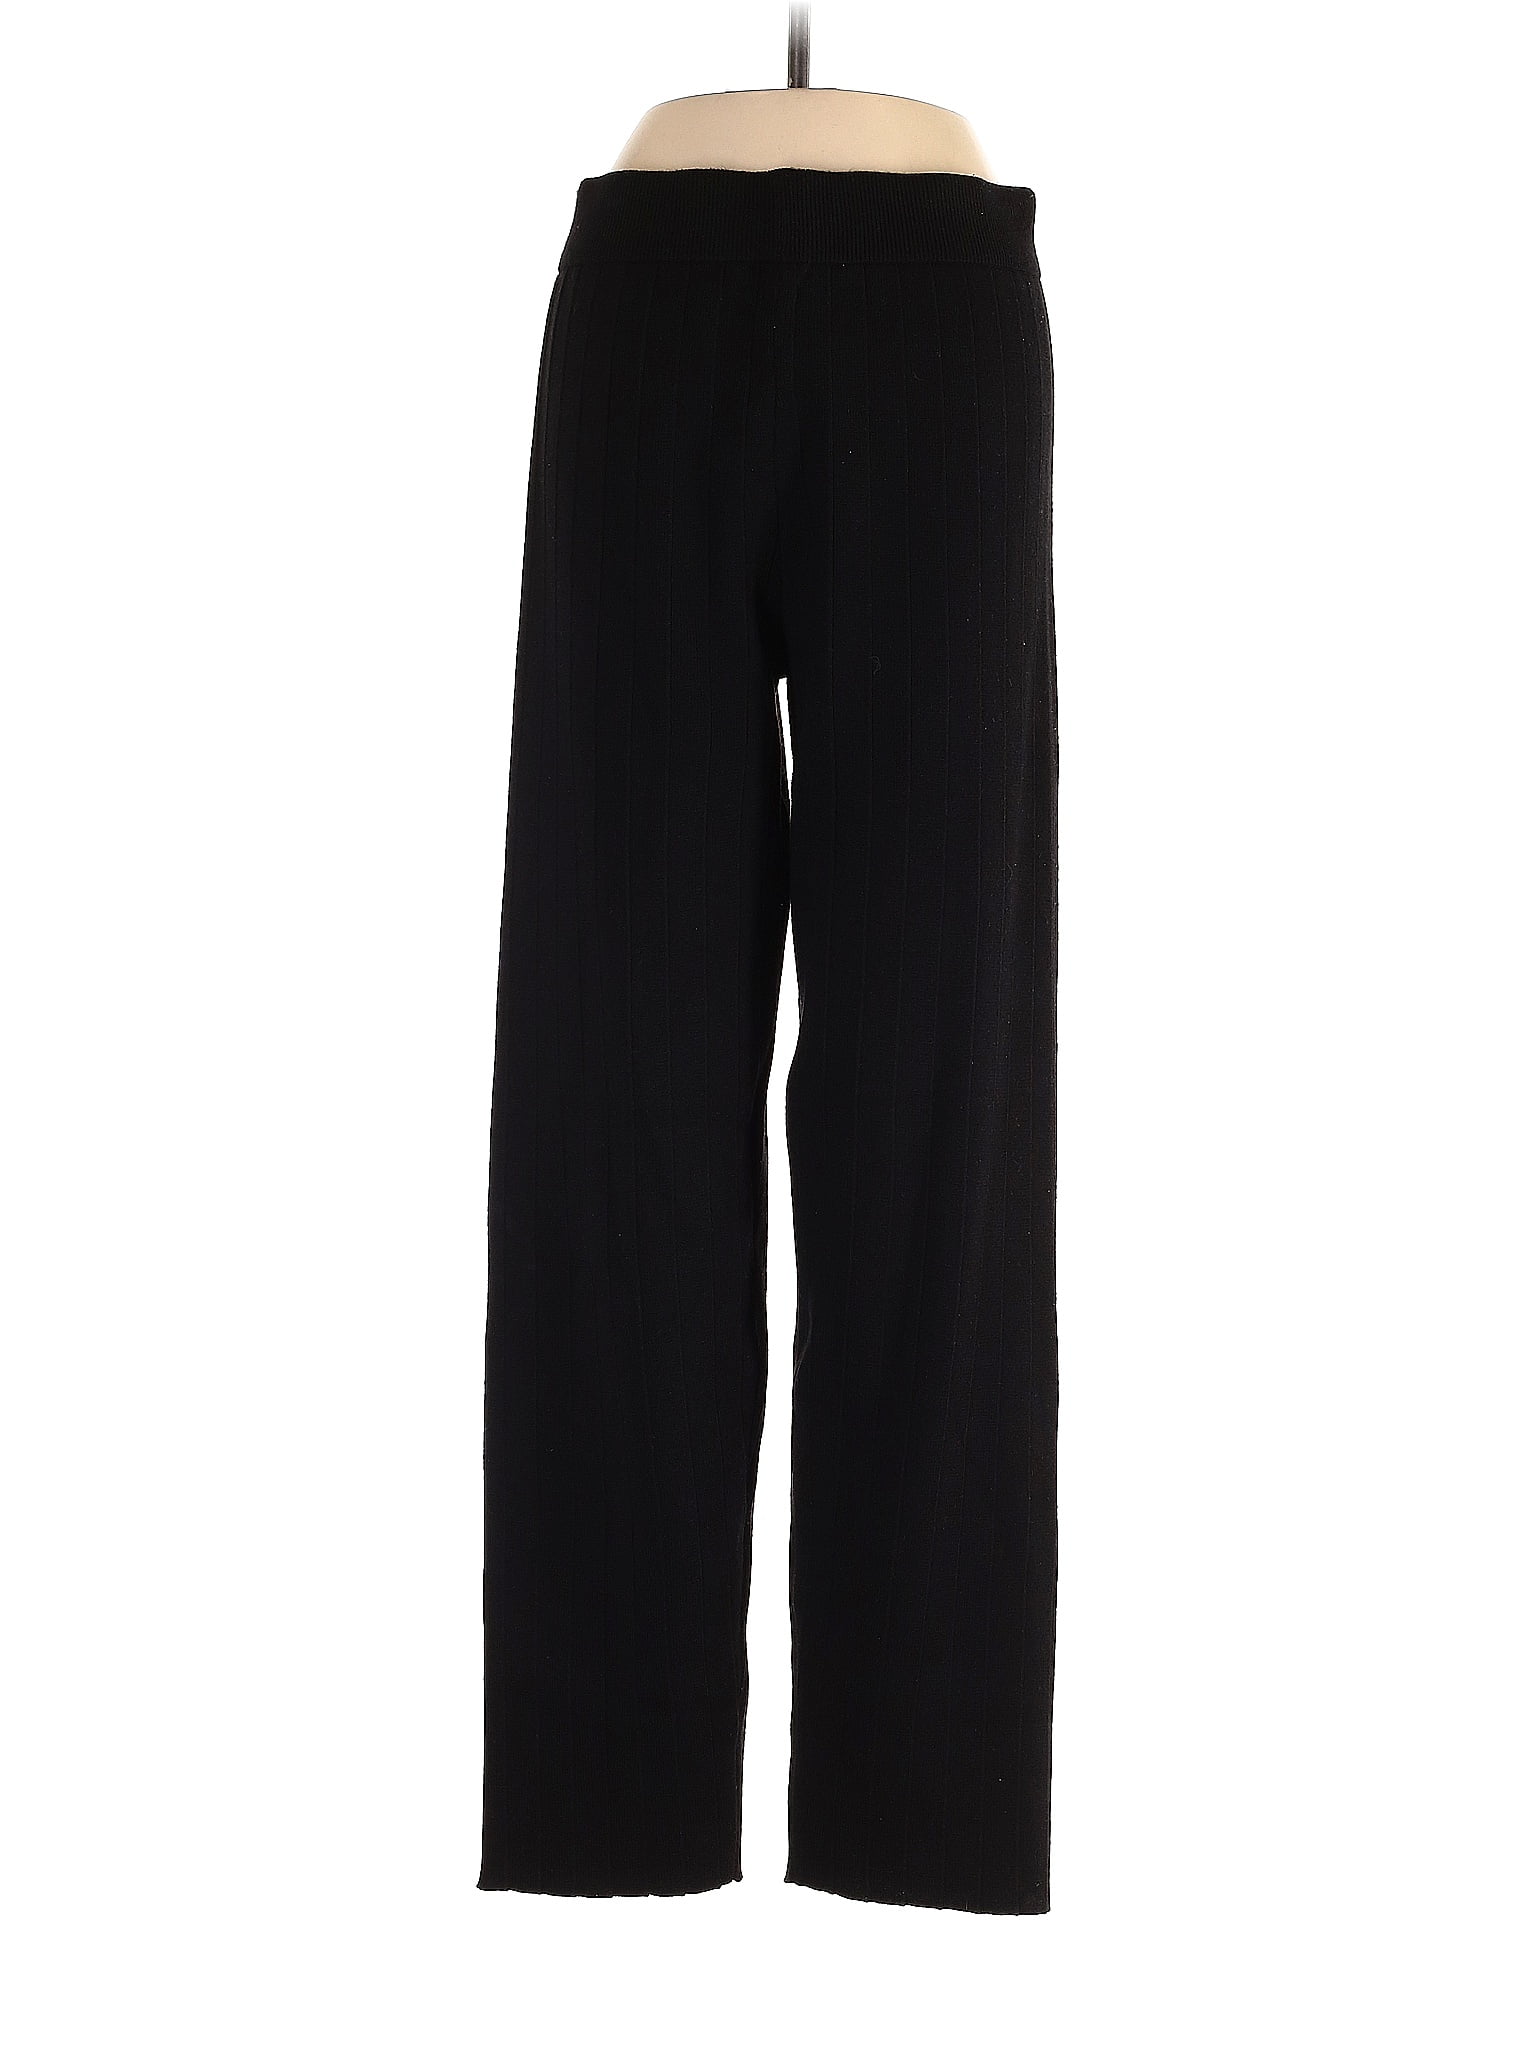 Silk & Salt Black Casual Pants Size S - 73% off | thredUP